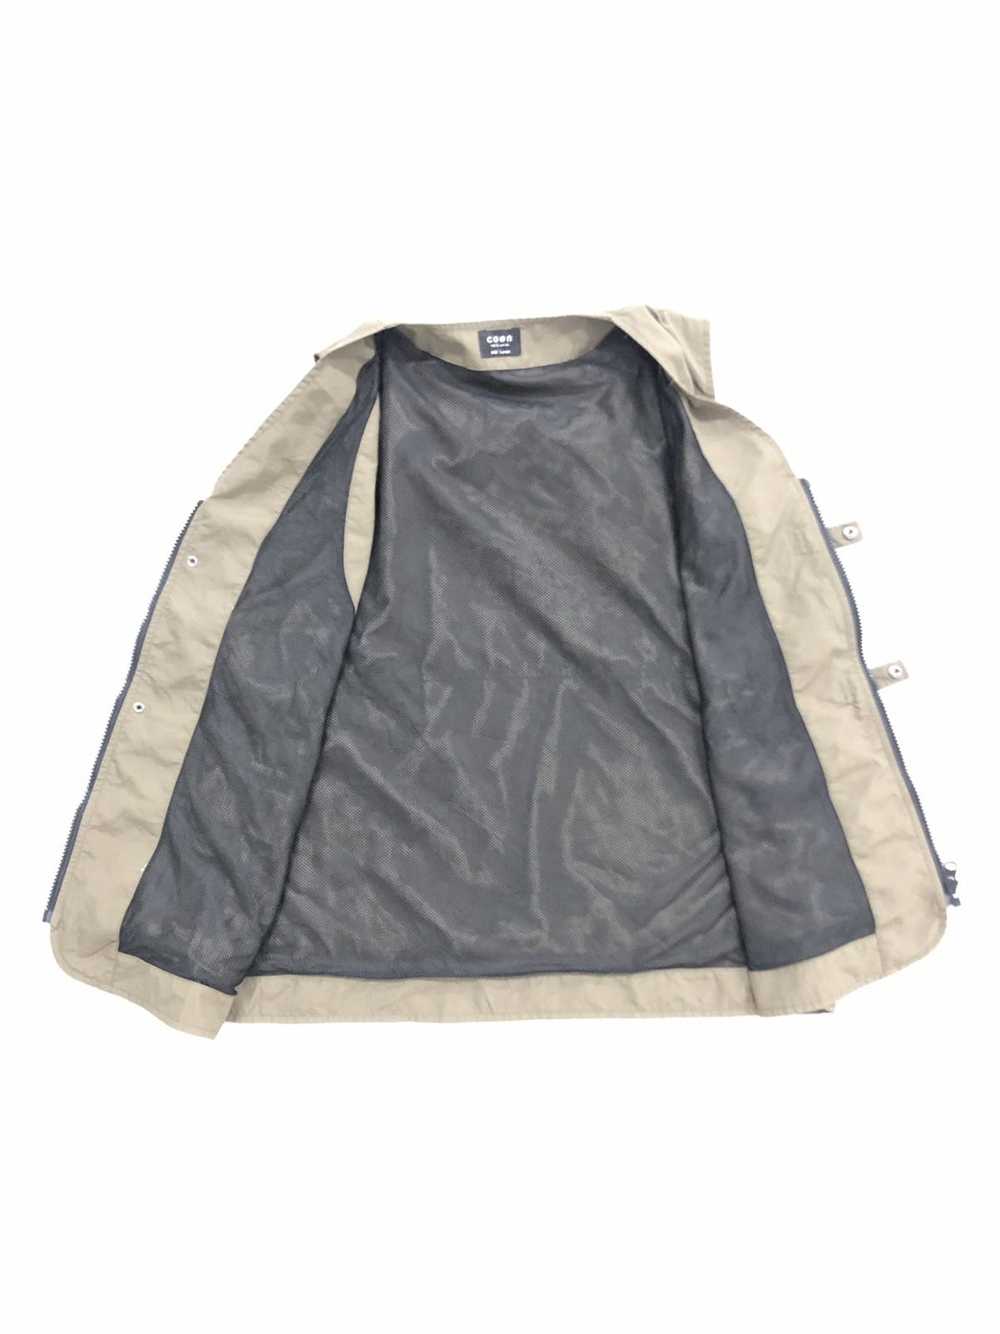 Japanese Brand Coen Brown Vest - image 5